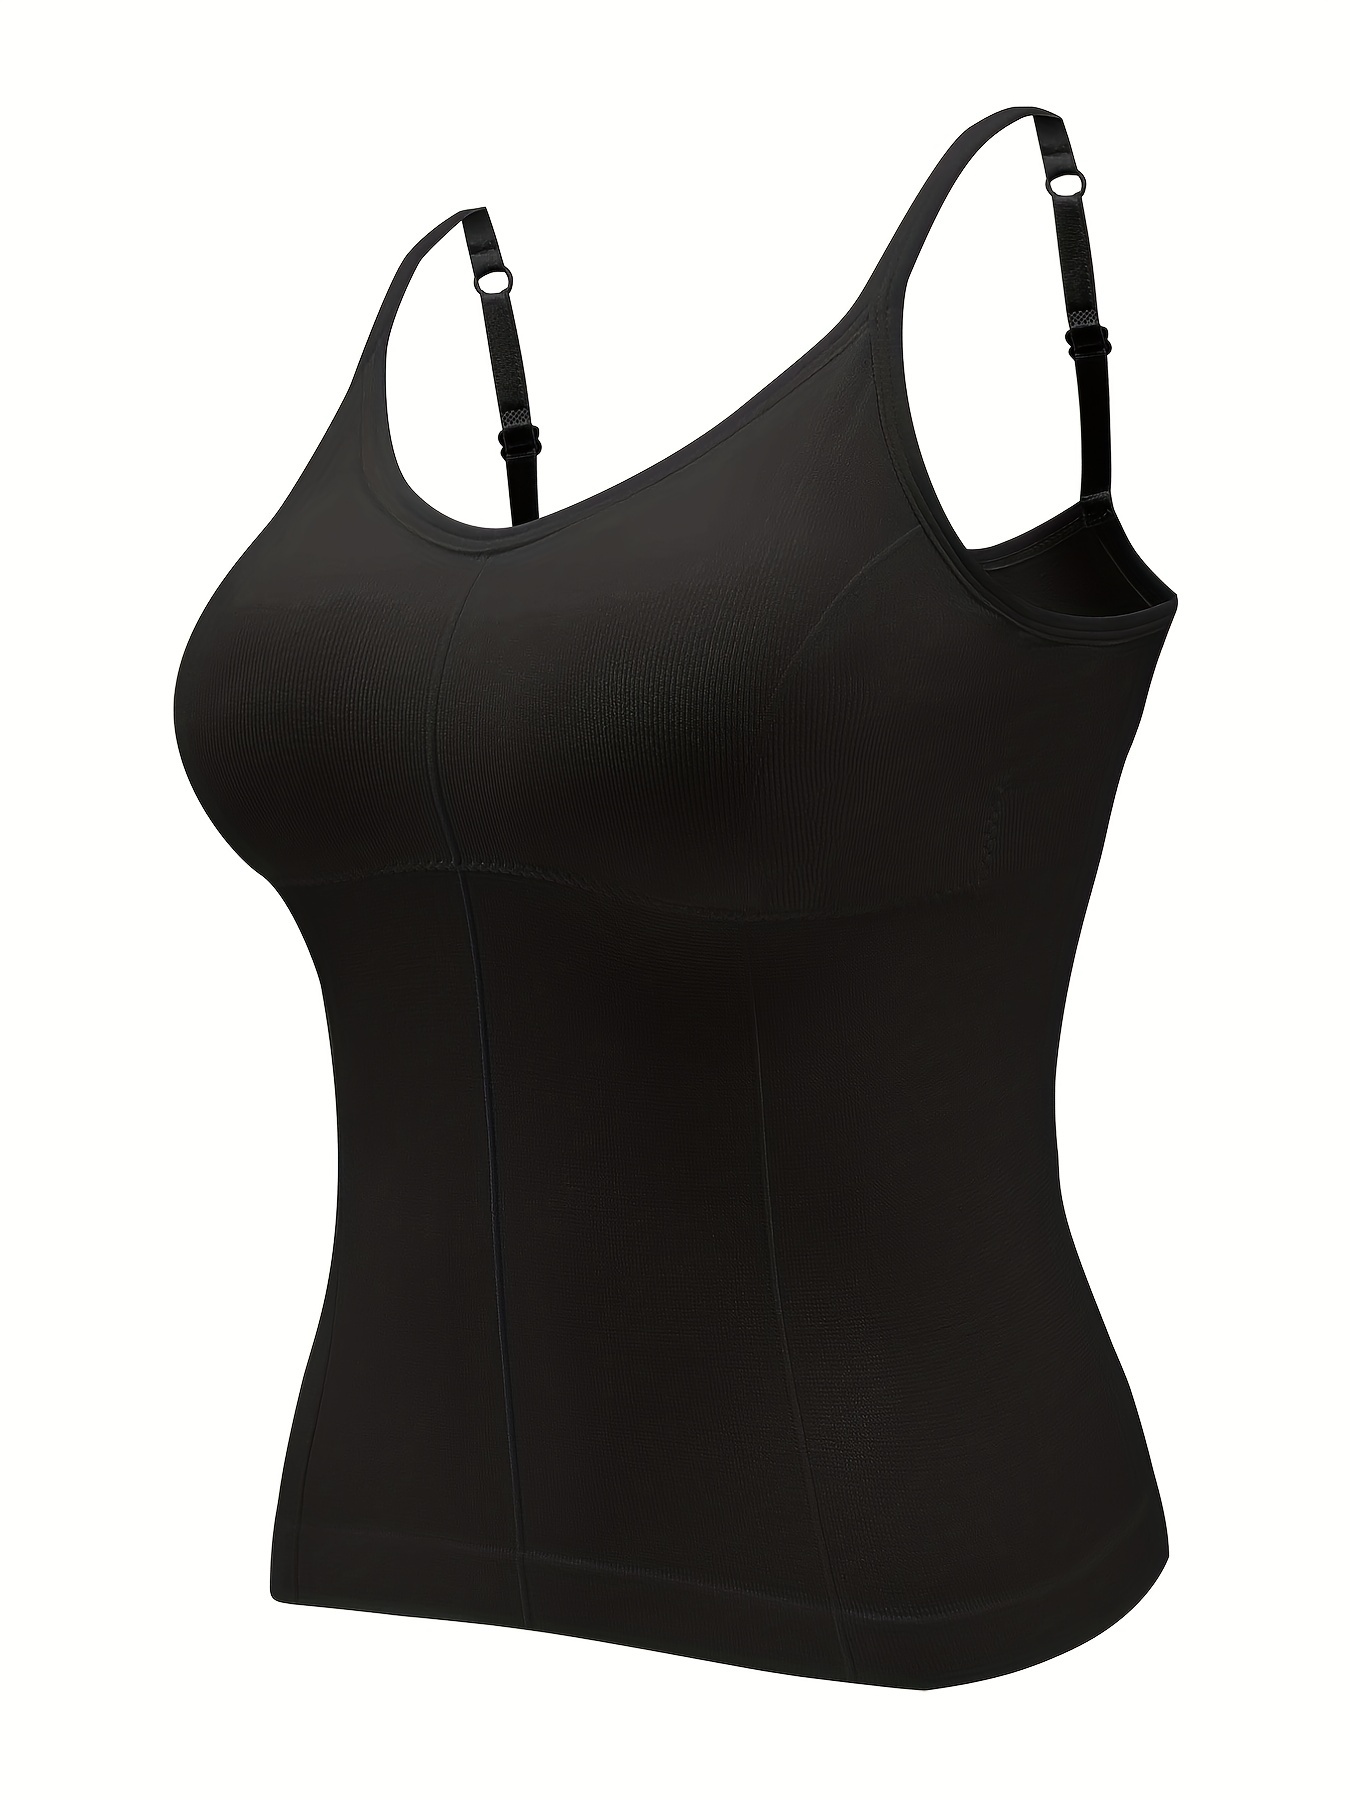 Womens Camisole with Shelf Bra Undershirts Adjustable Strap Cami Tank Top